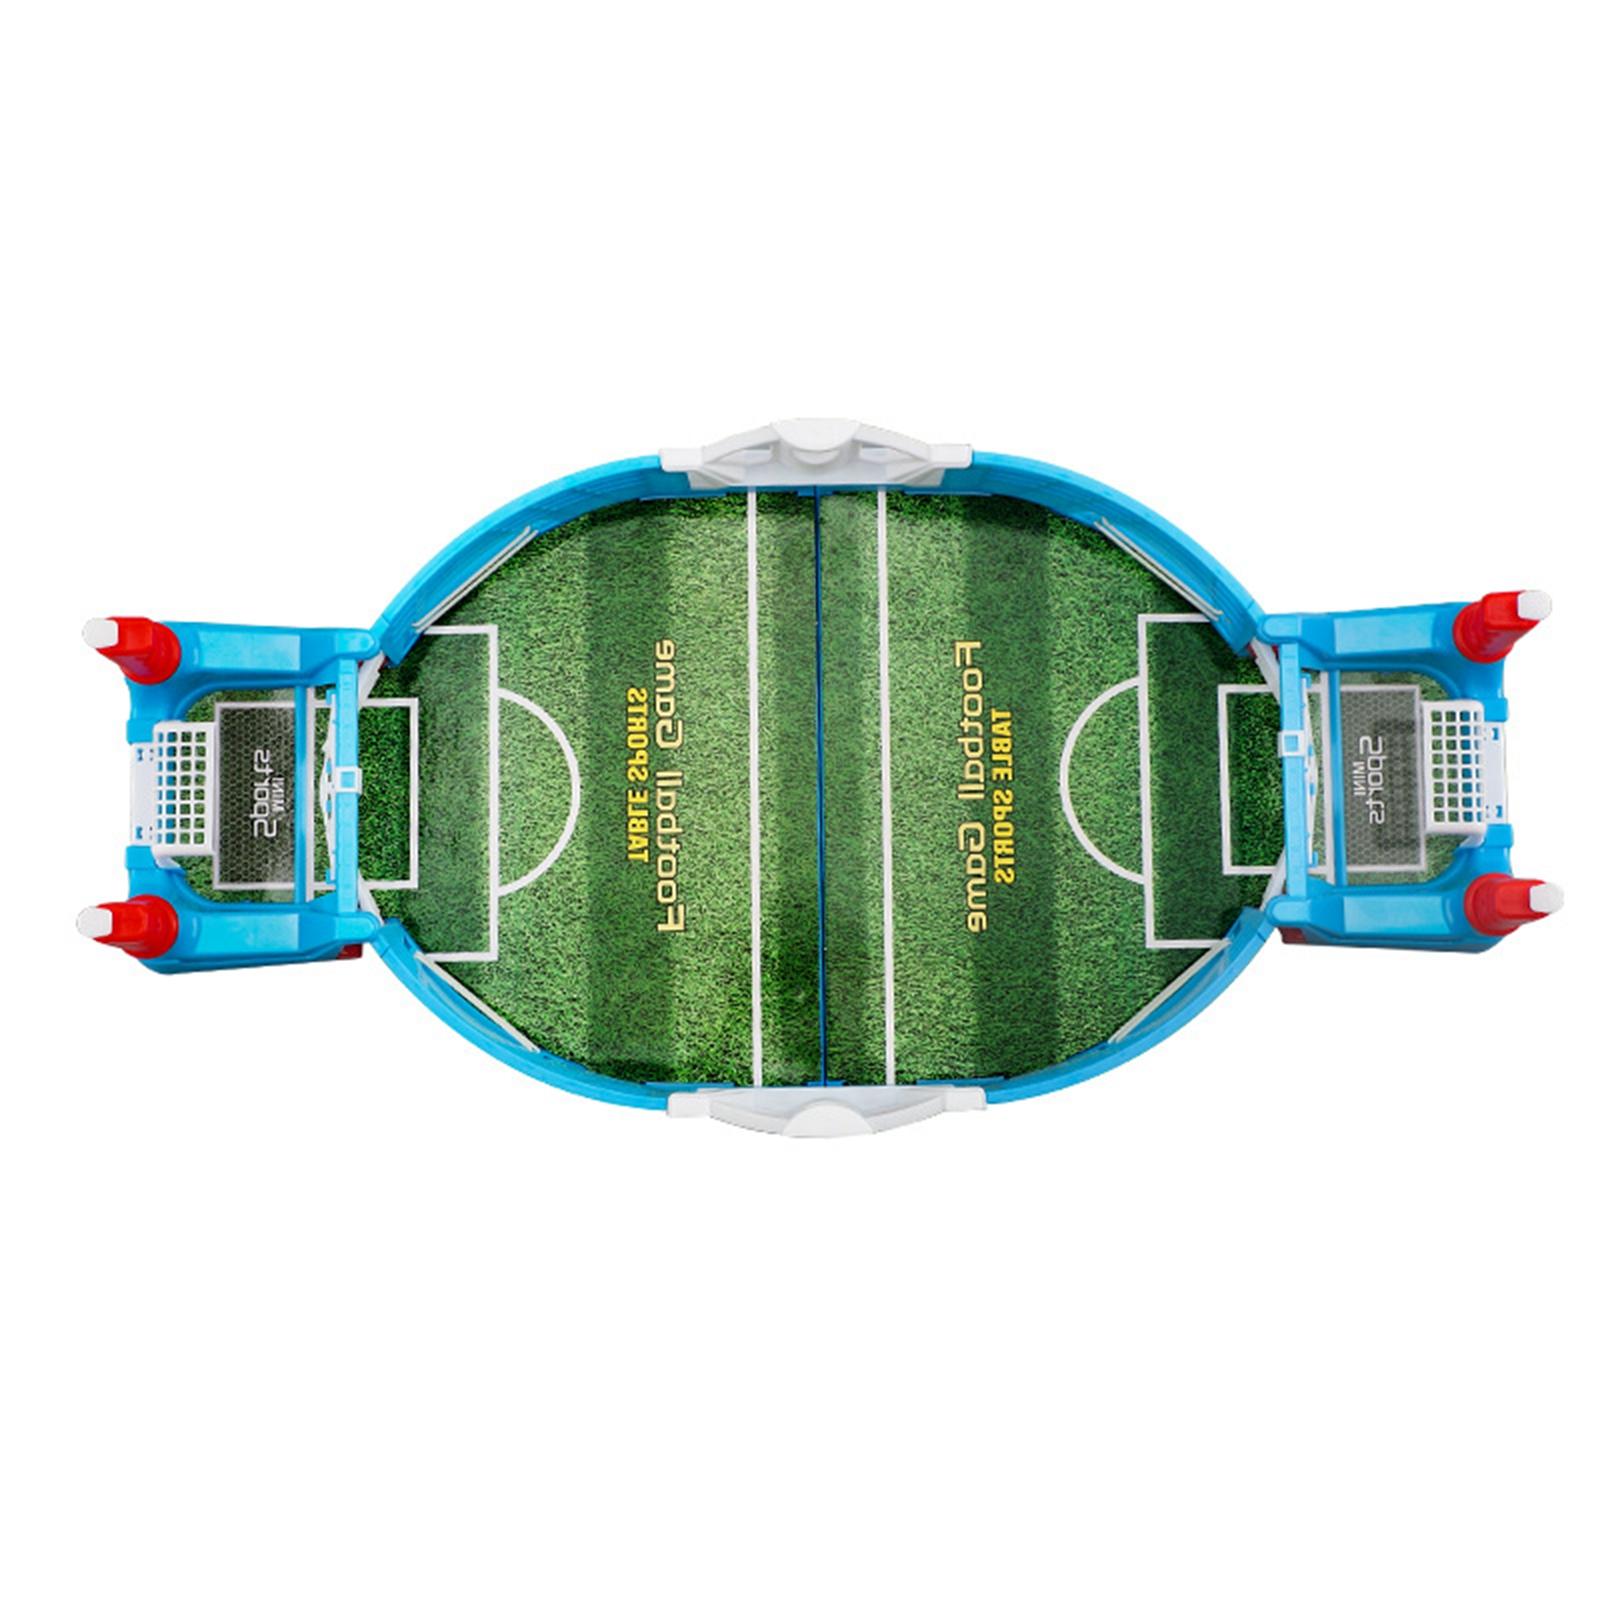 Desktop Football Board Games Kit Indoor Toy Sports for Adults Kids 57cmx27cm 4 Balls